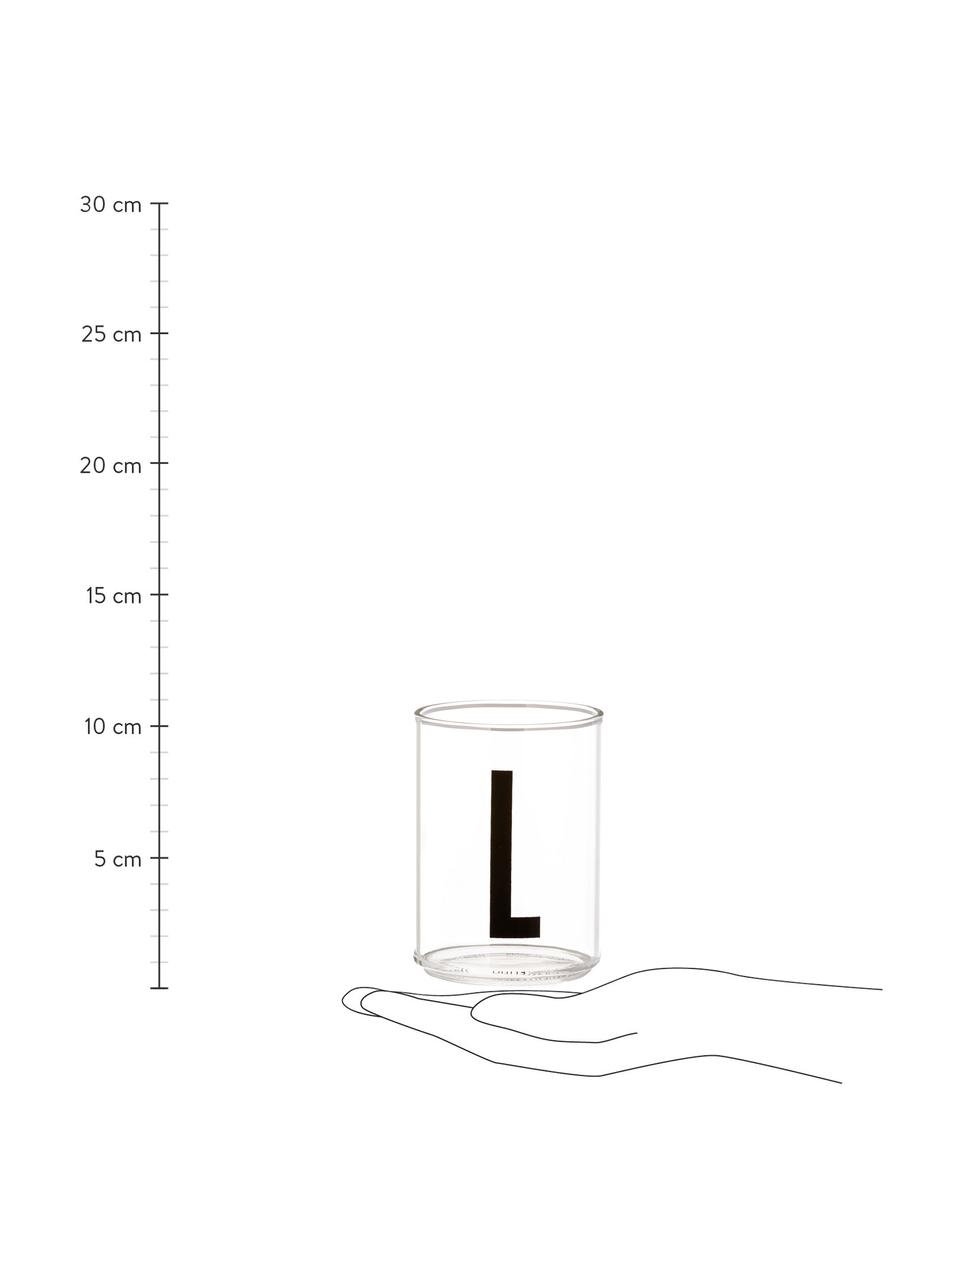 Design waterglas Personal met letters (varianten van A tot Z), Borosilicaatglas, Transparant, zwart, Waterglas M, 300 ml